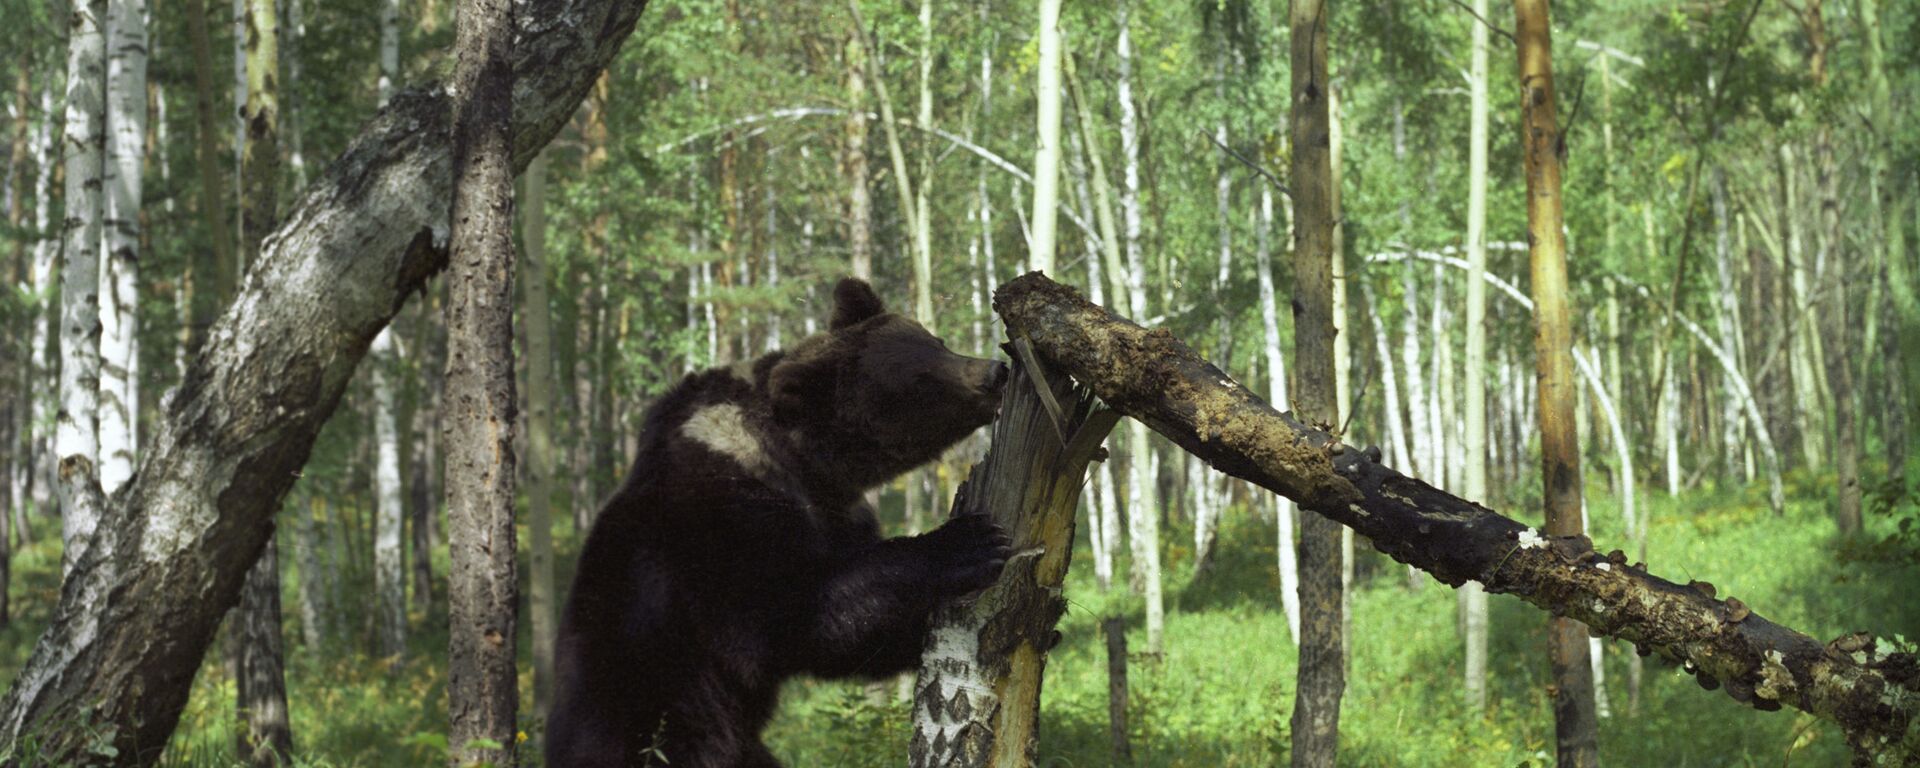 Бурый медведь в лесу - Sputnik Беларусь, 1920, 22.05.2021